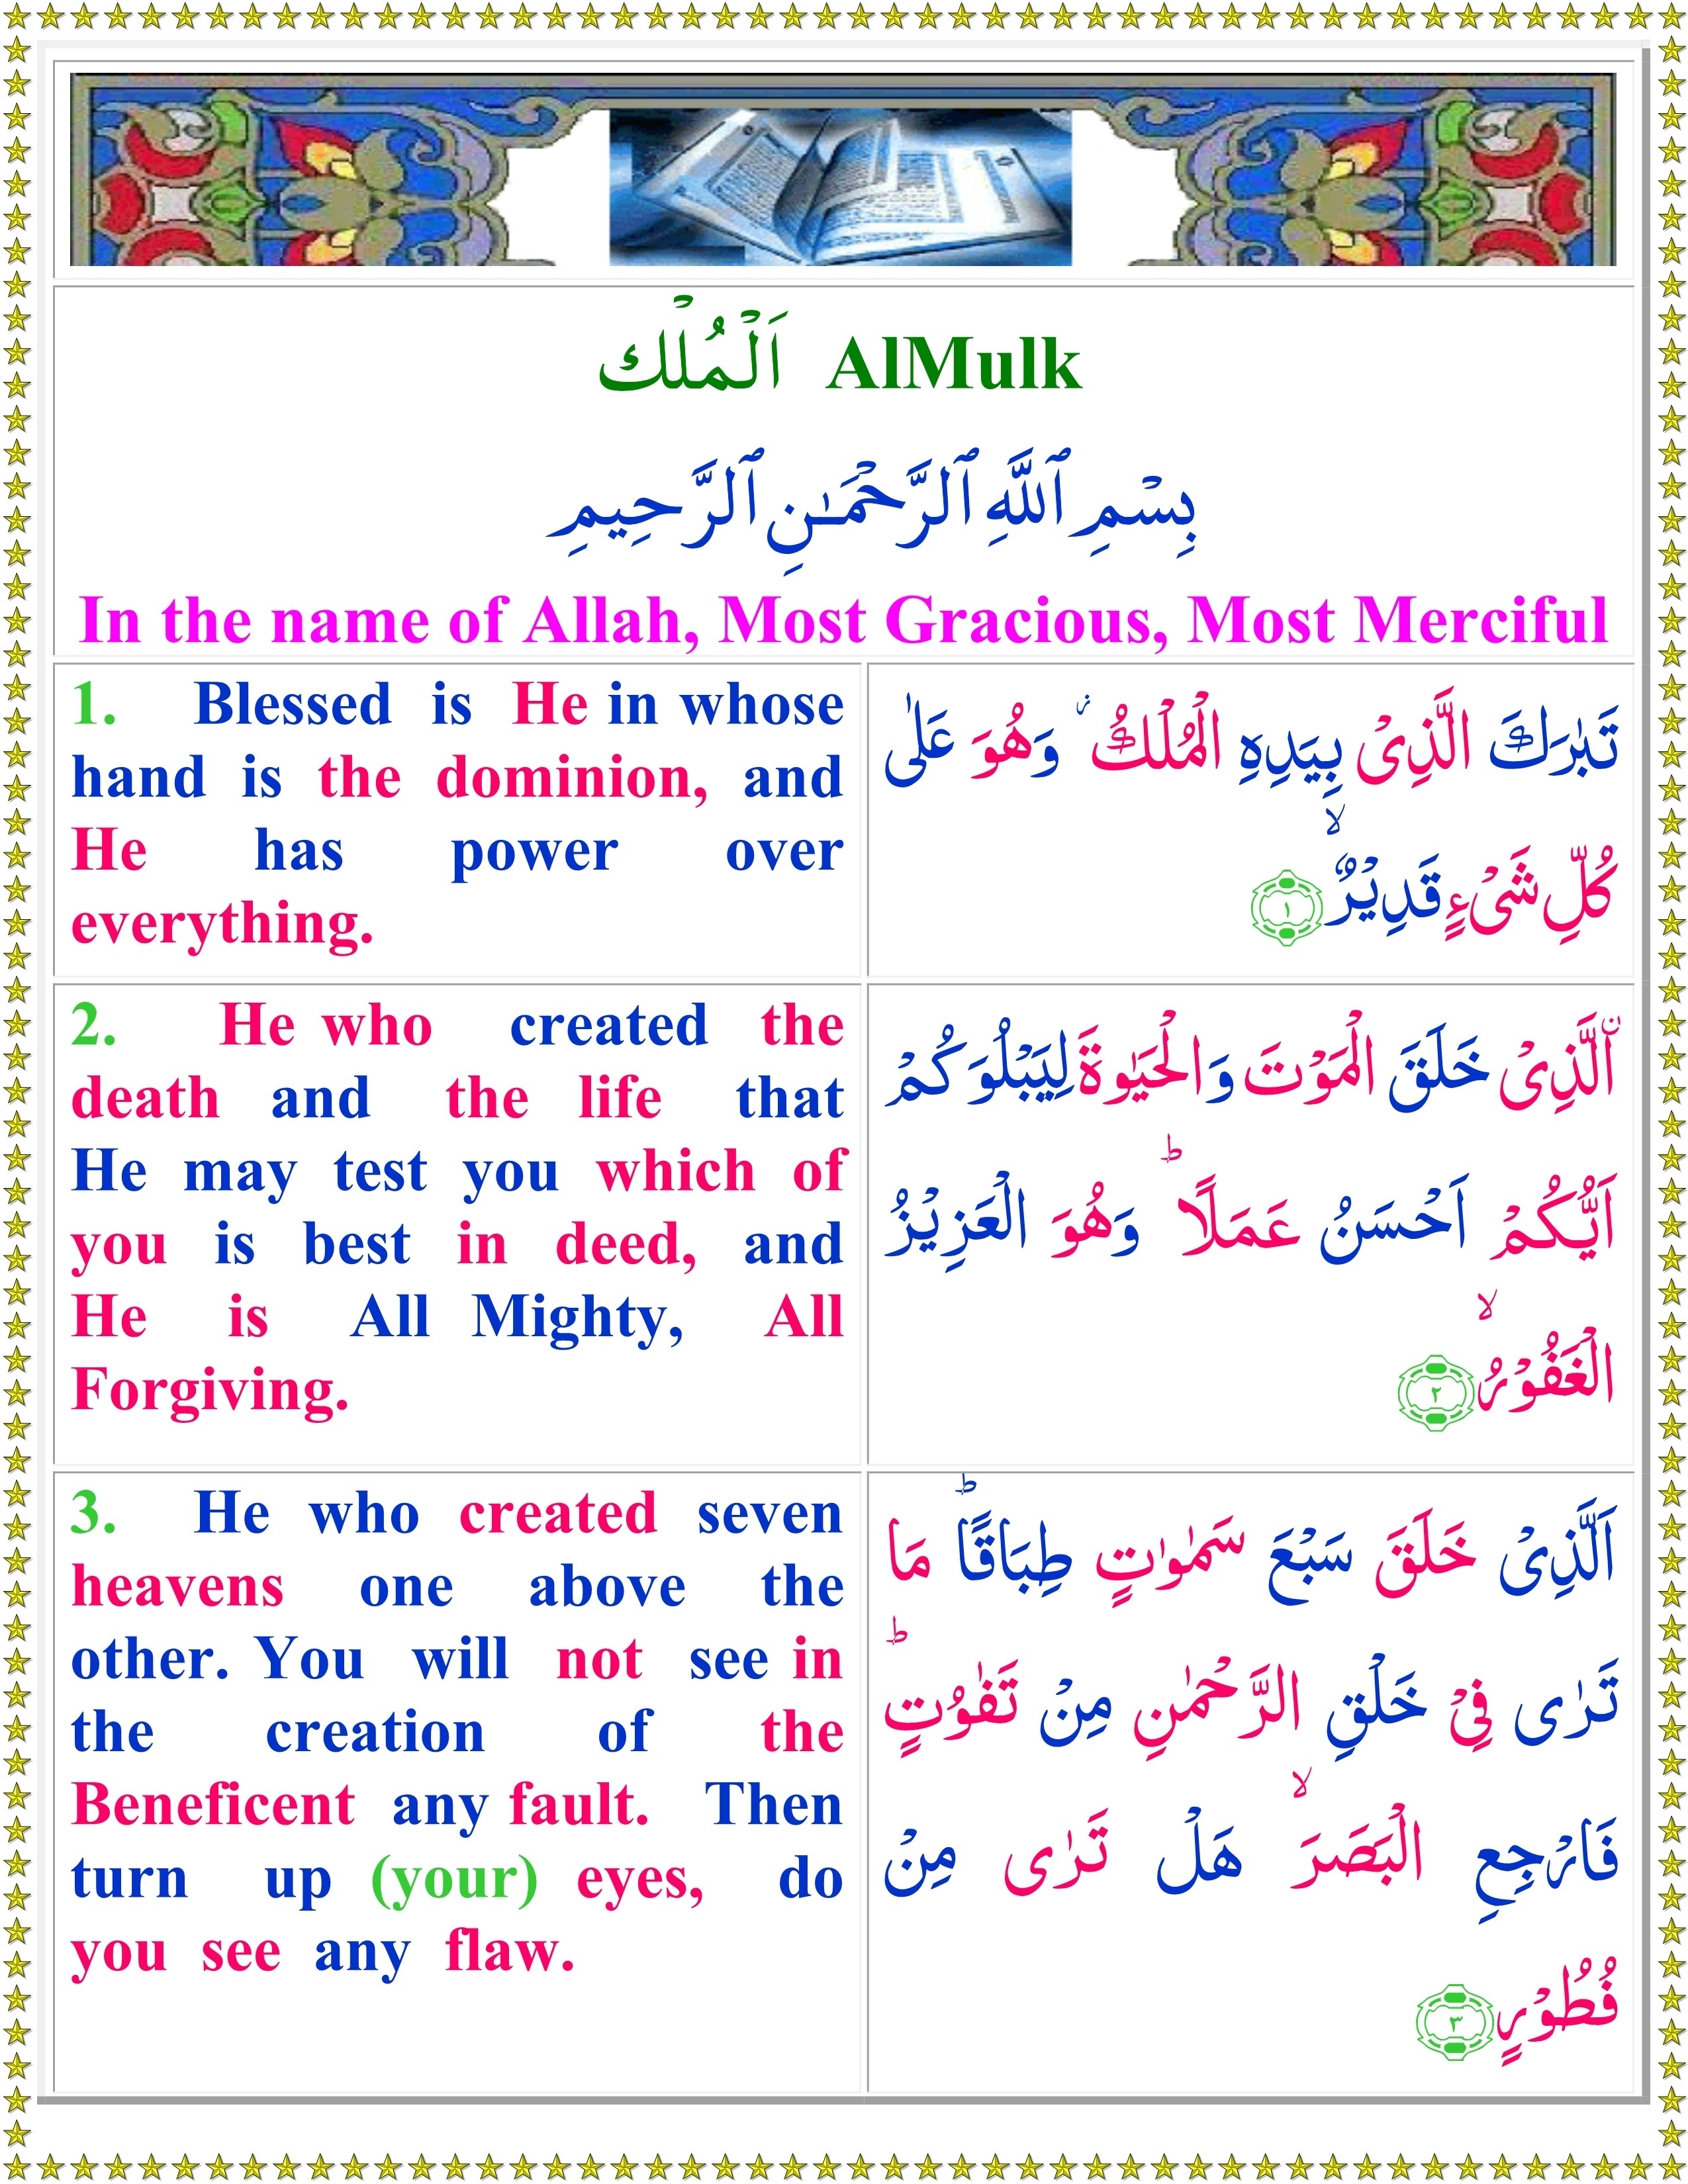 Read Surah Al Mulk With English Translation Quran O Sunnat